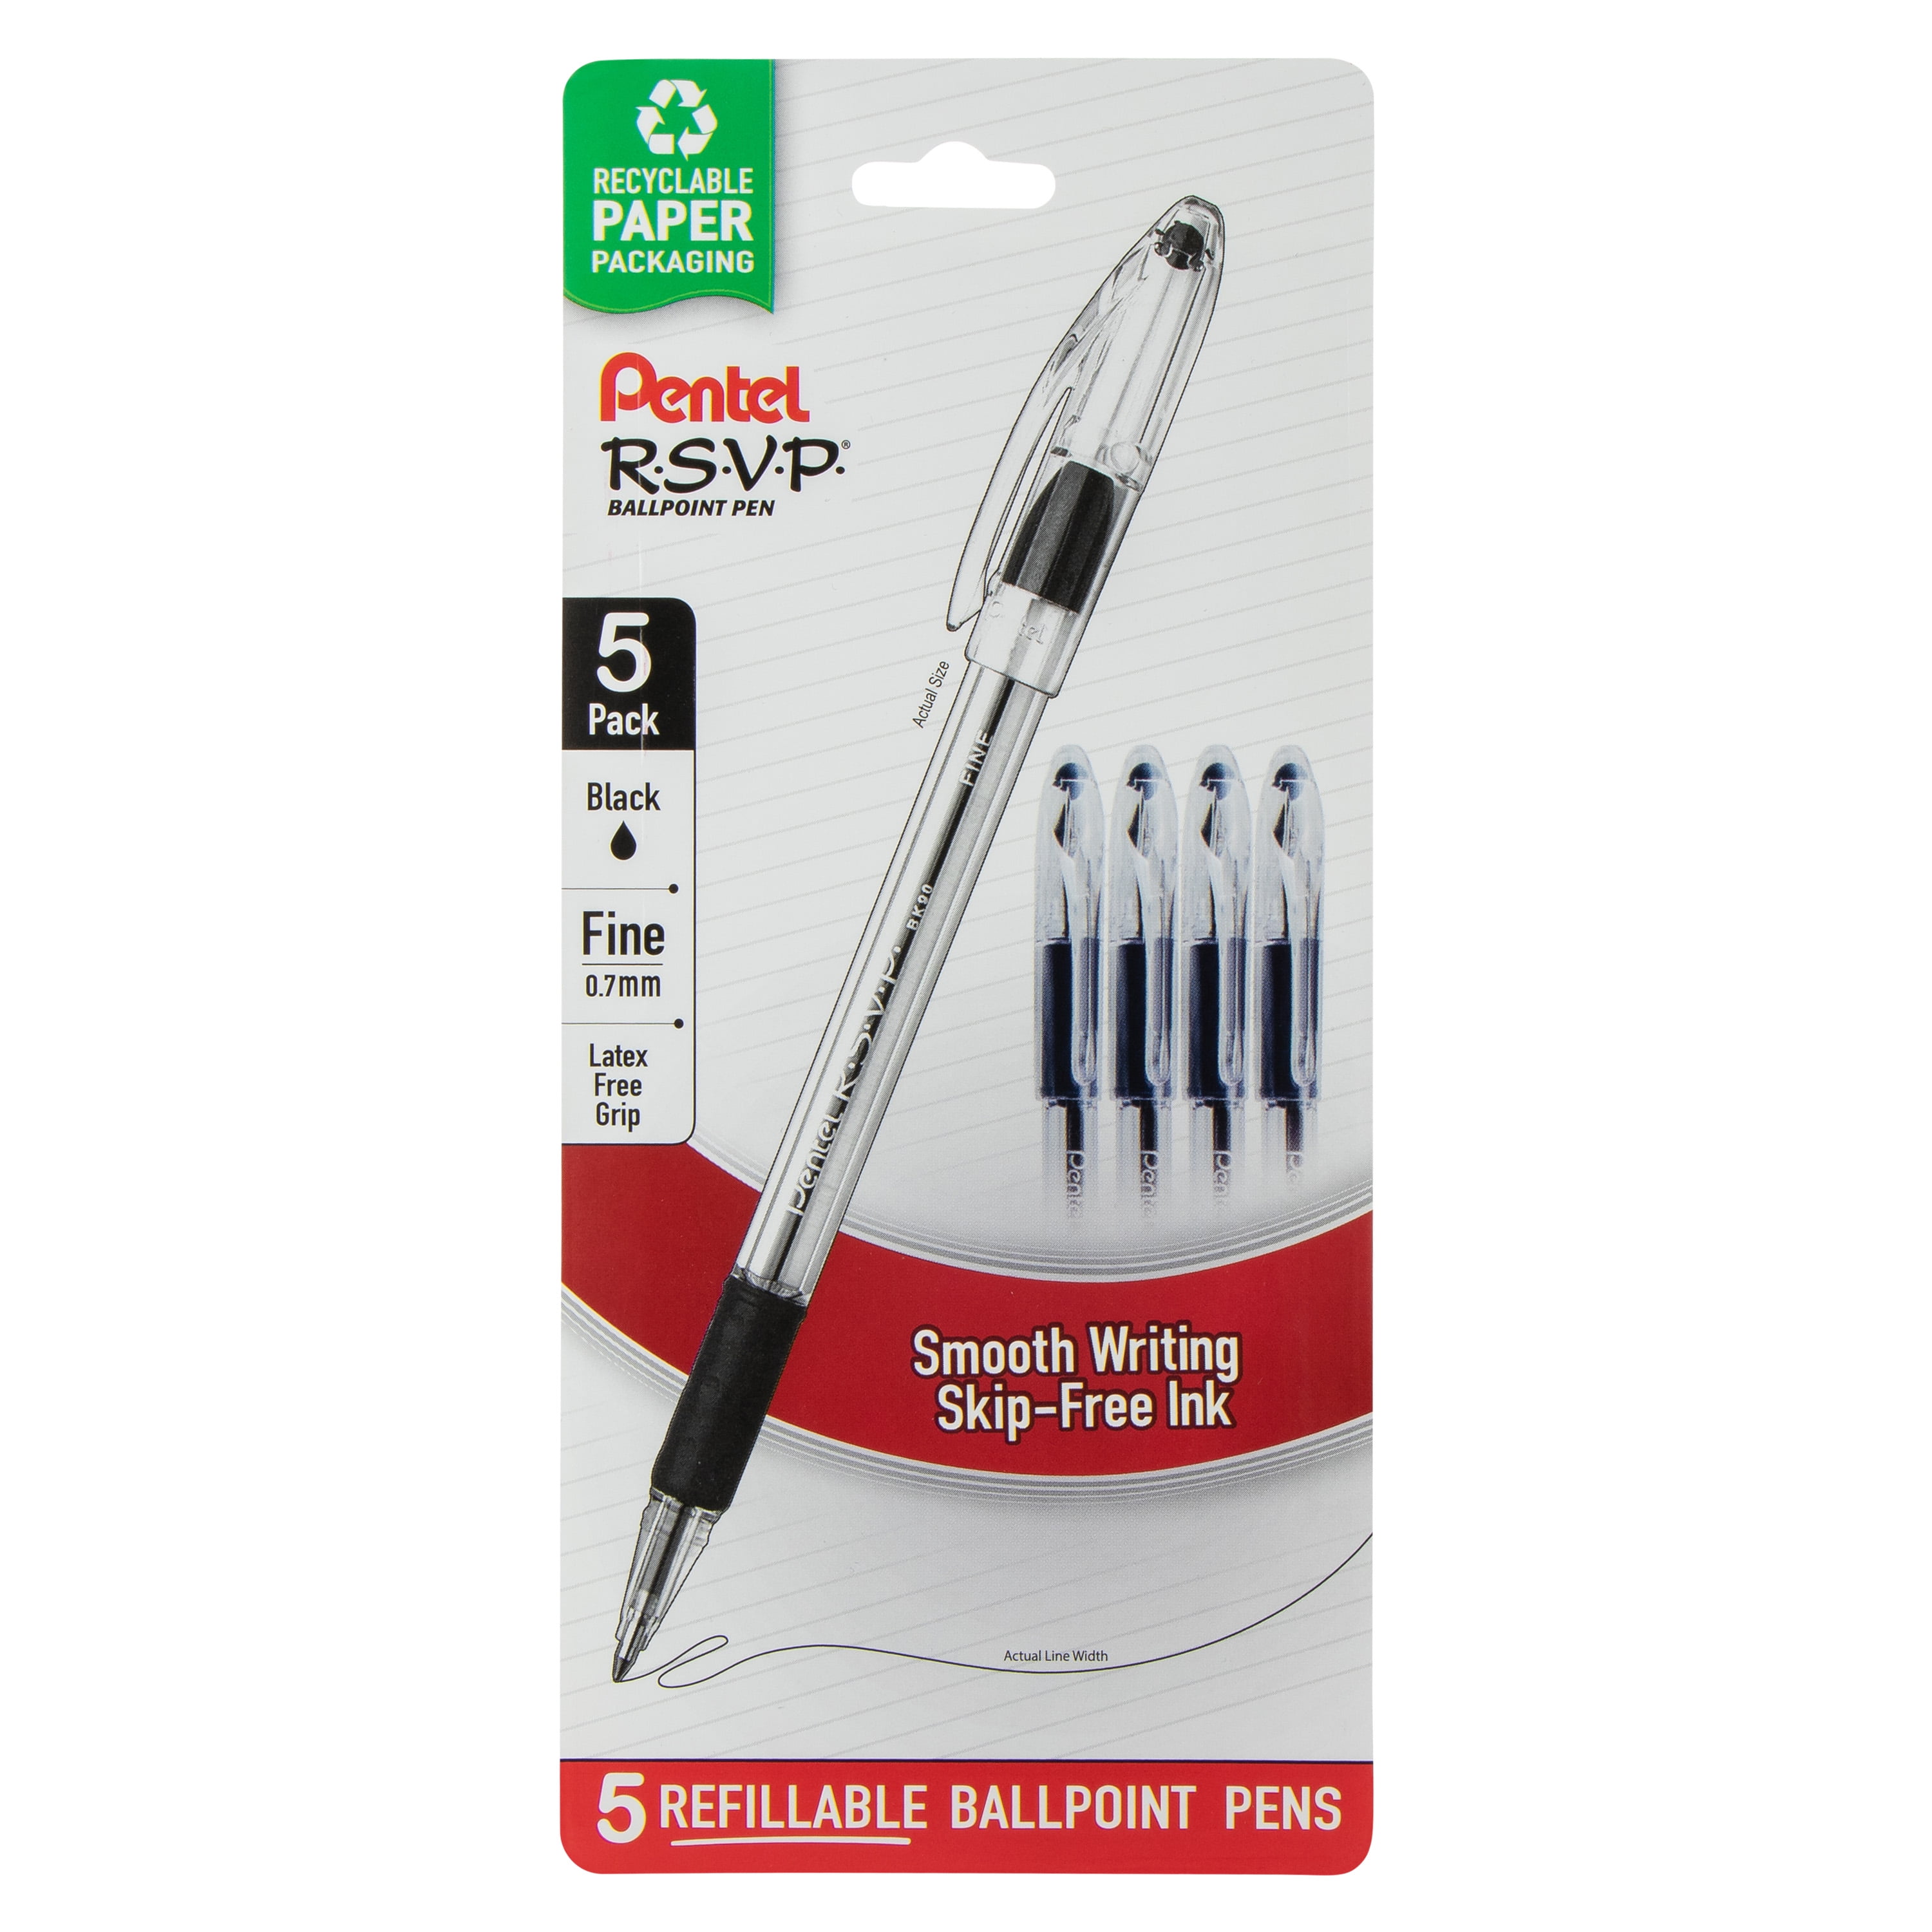 Lowest Price: Pentel R.S.V.P. Ballpoint Pens